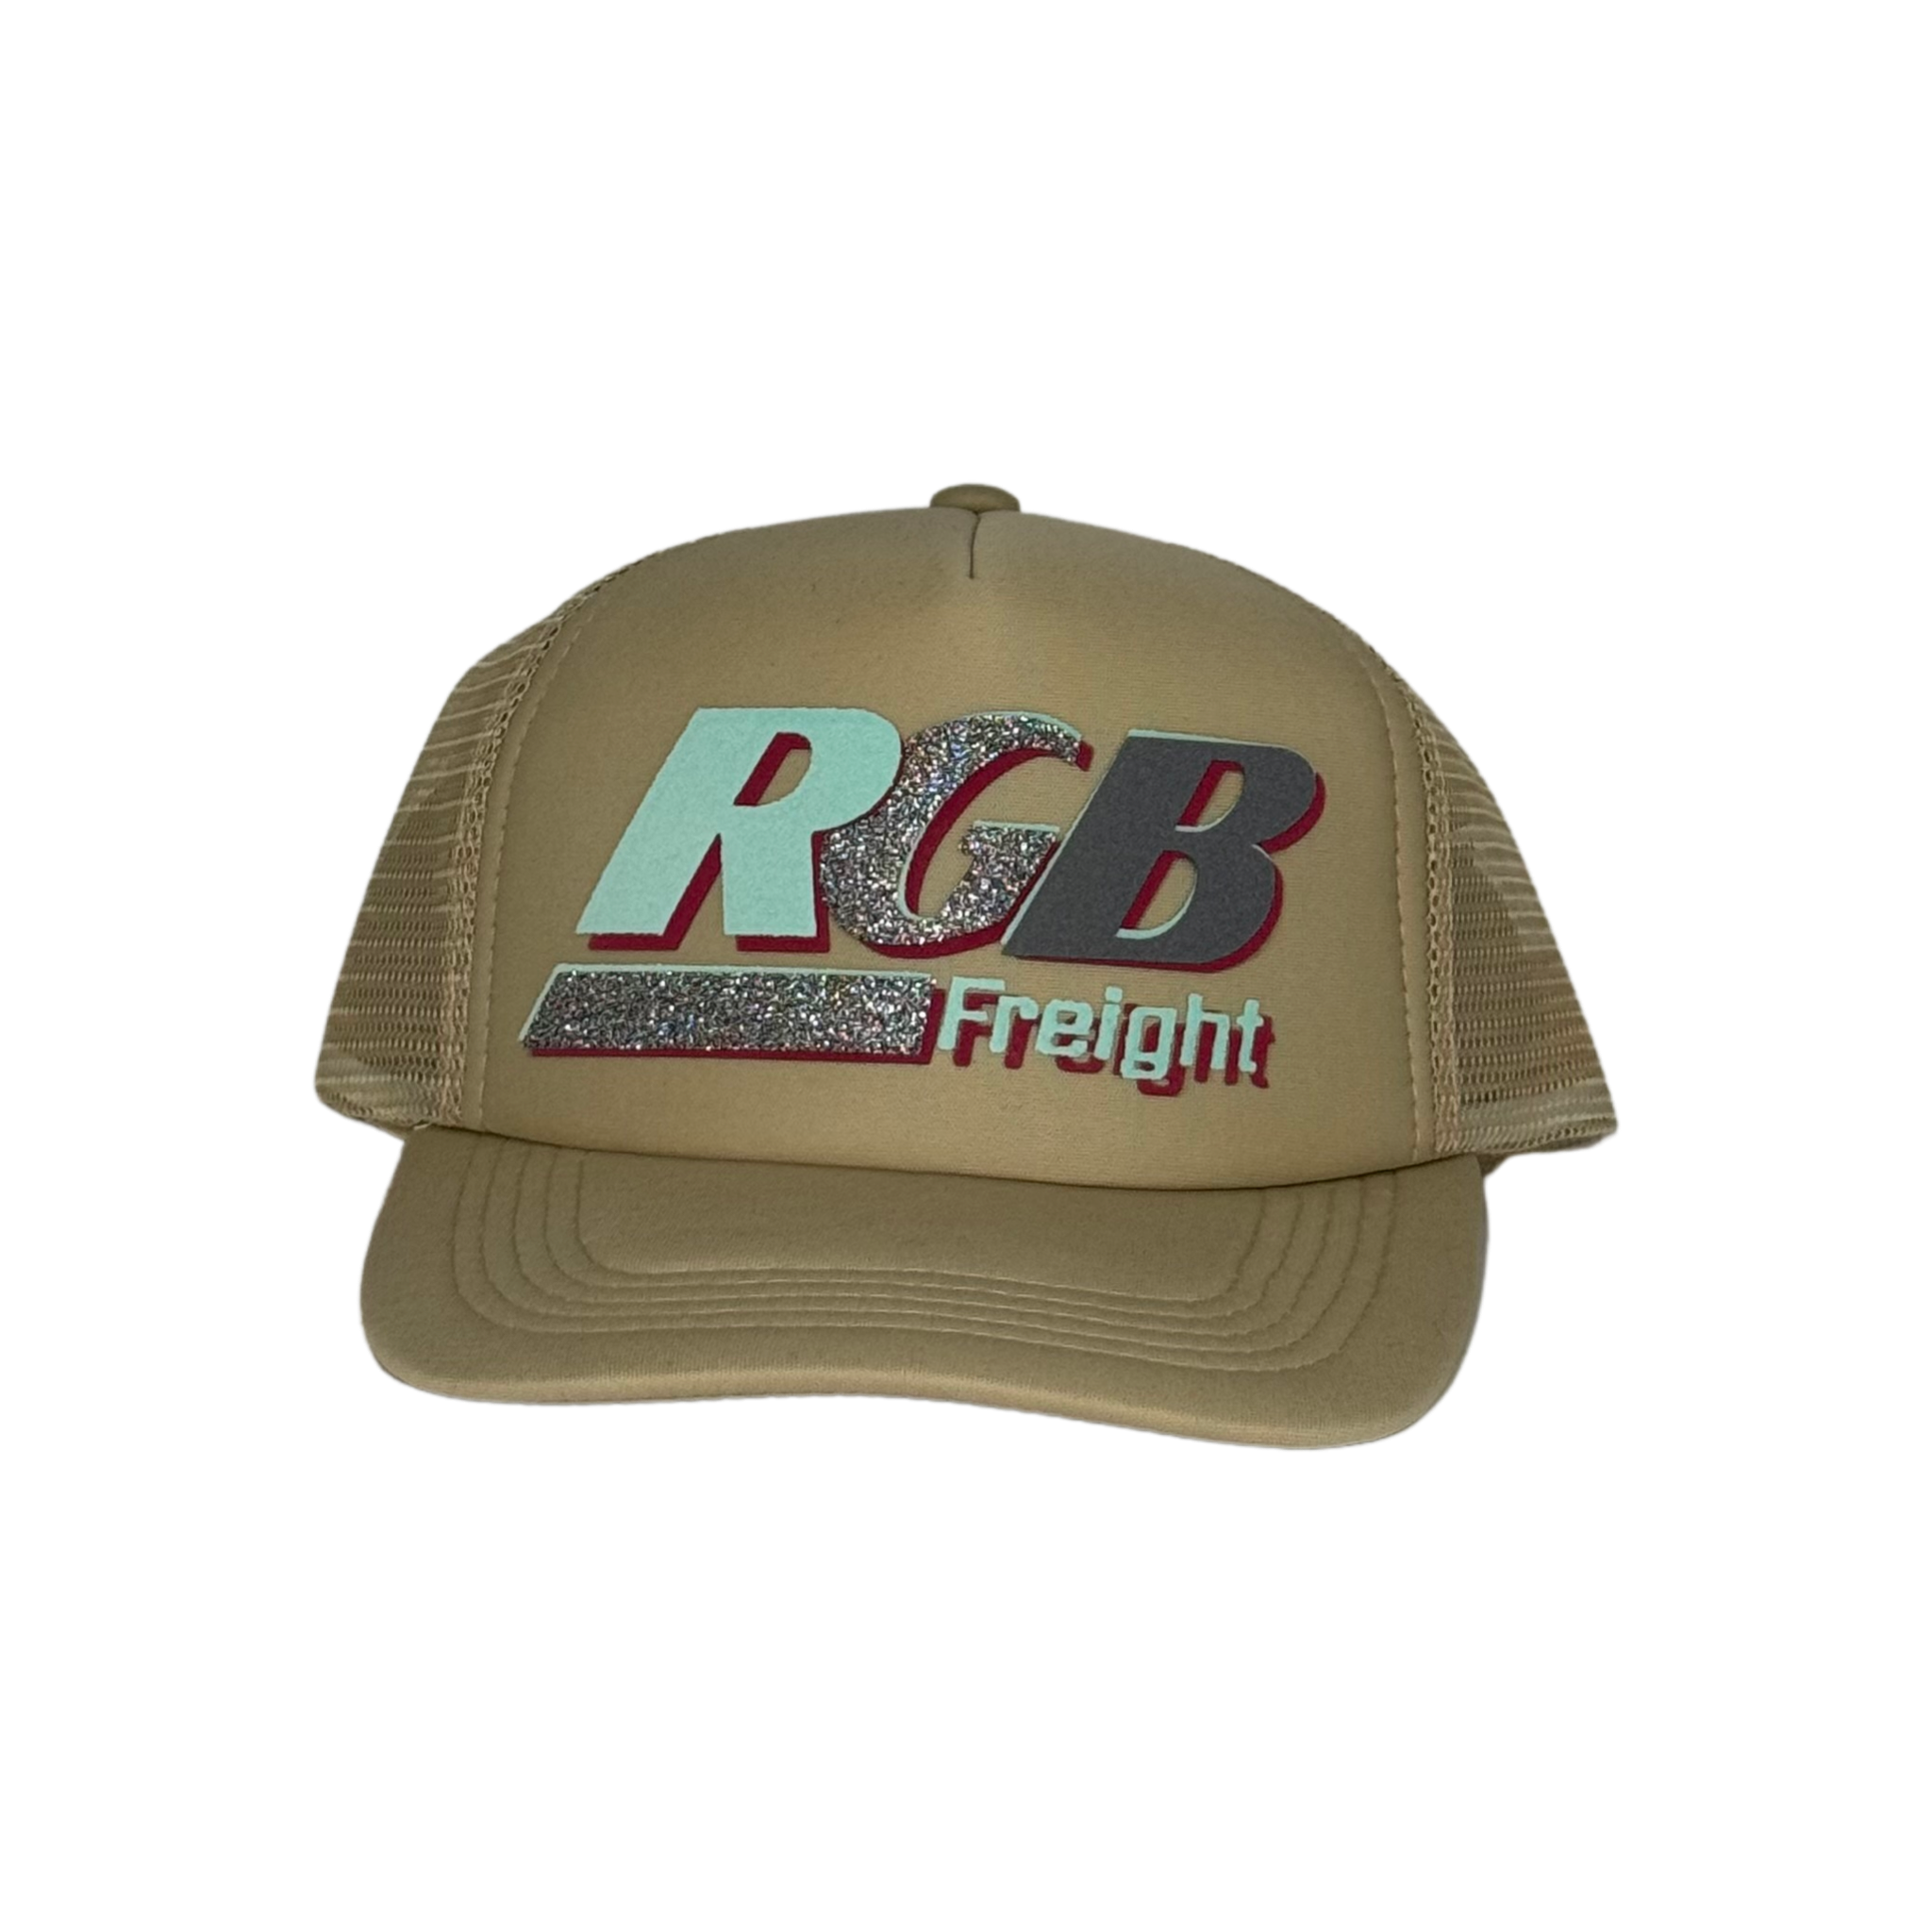 RGB FREIGHT TRUCKER HAT - “GLITCH” 1 of 1